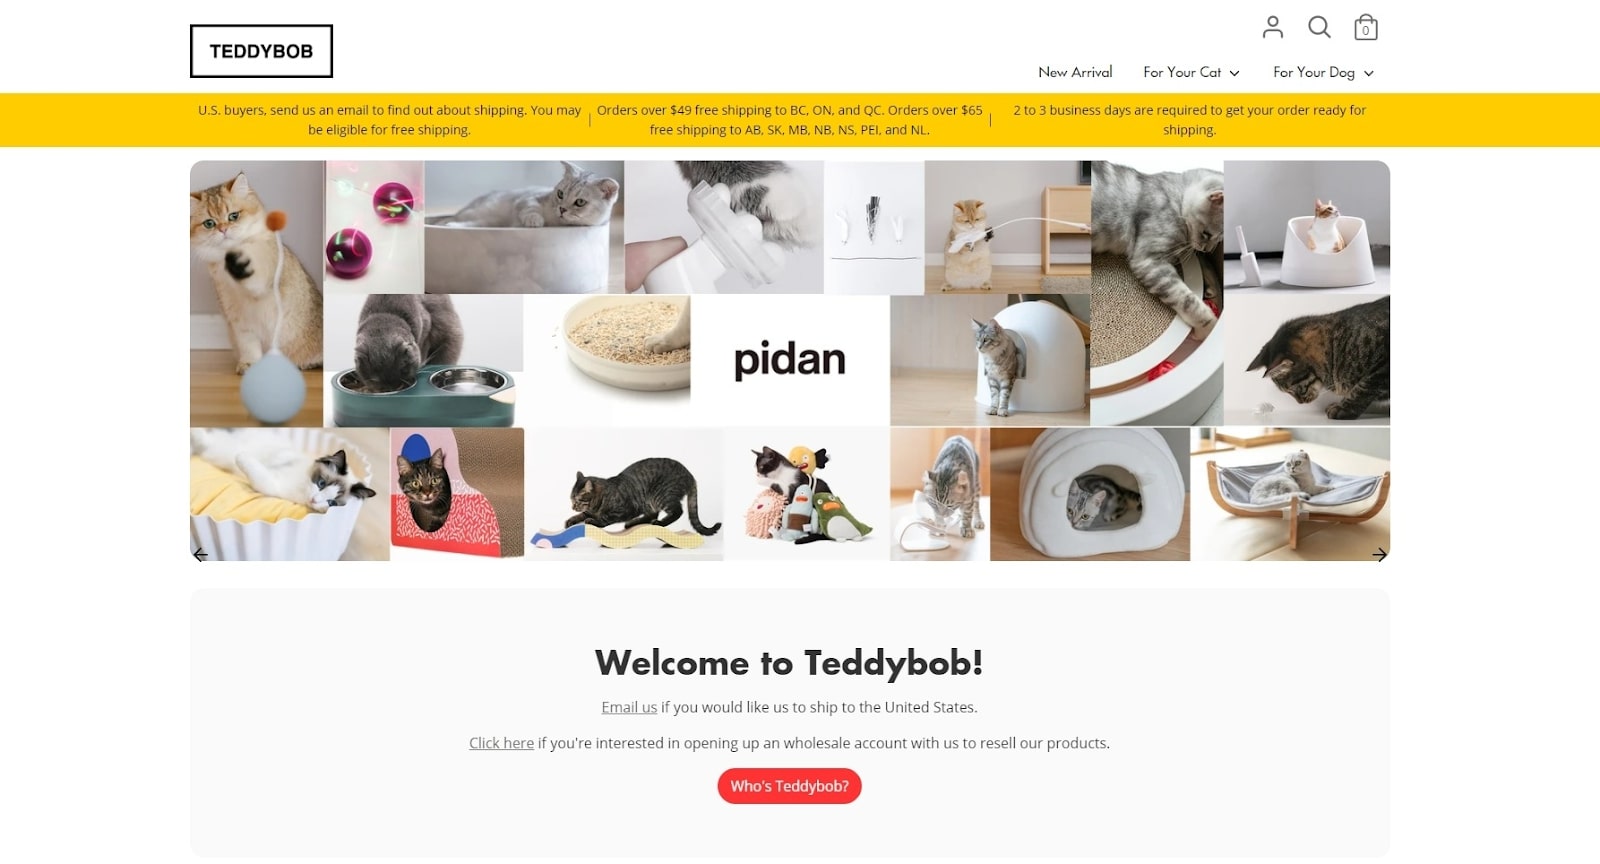 TeddyBob Pet Supplies